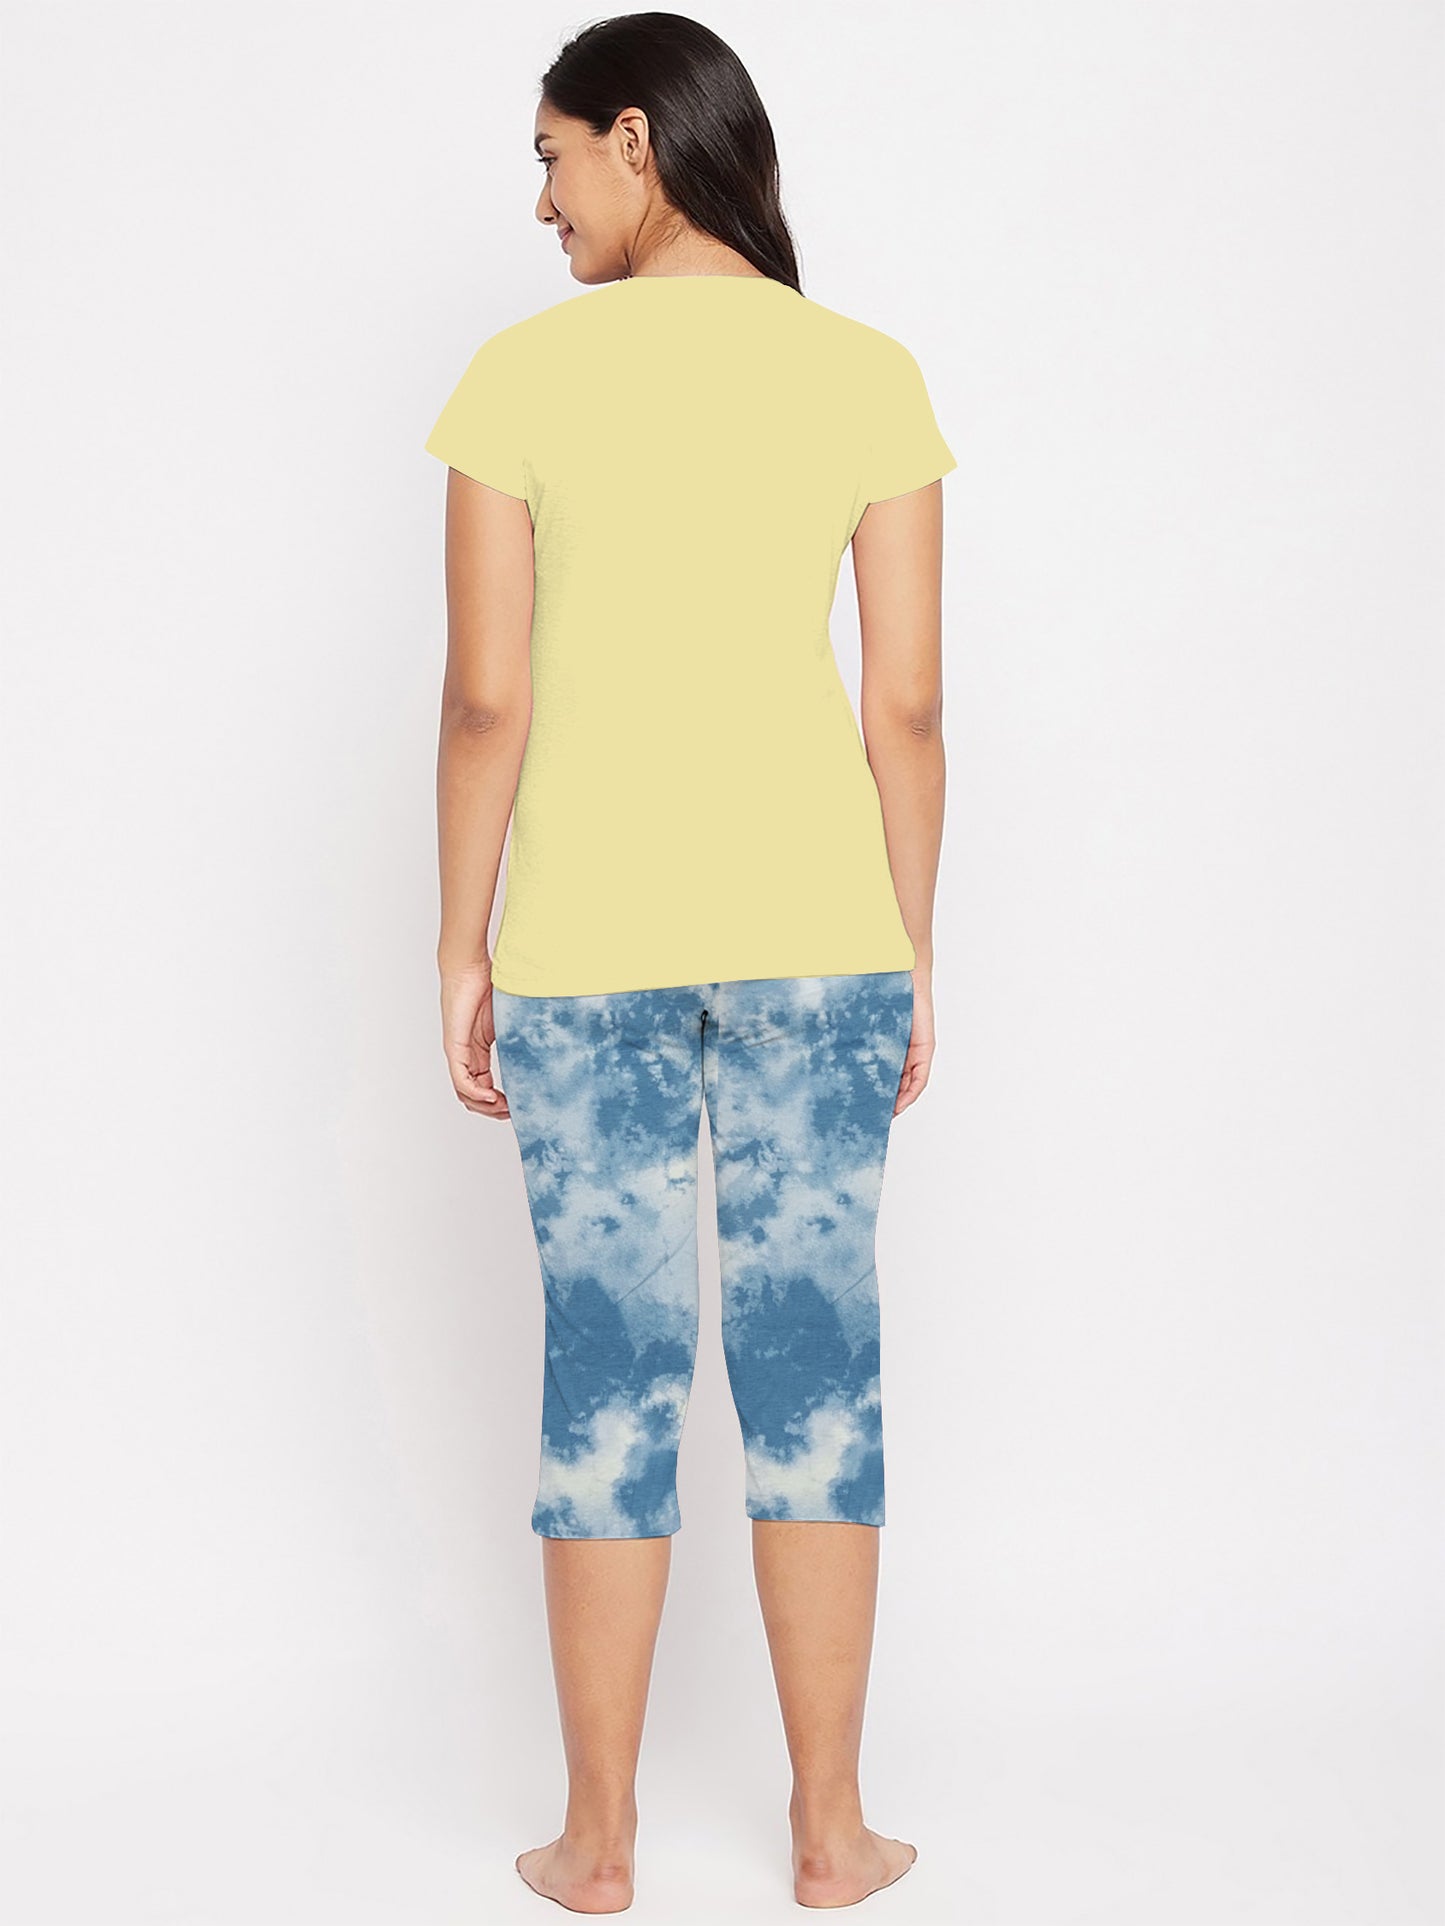 Yellow & Blue Abstract Capri set